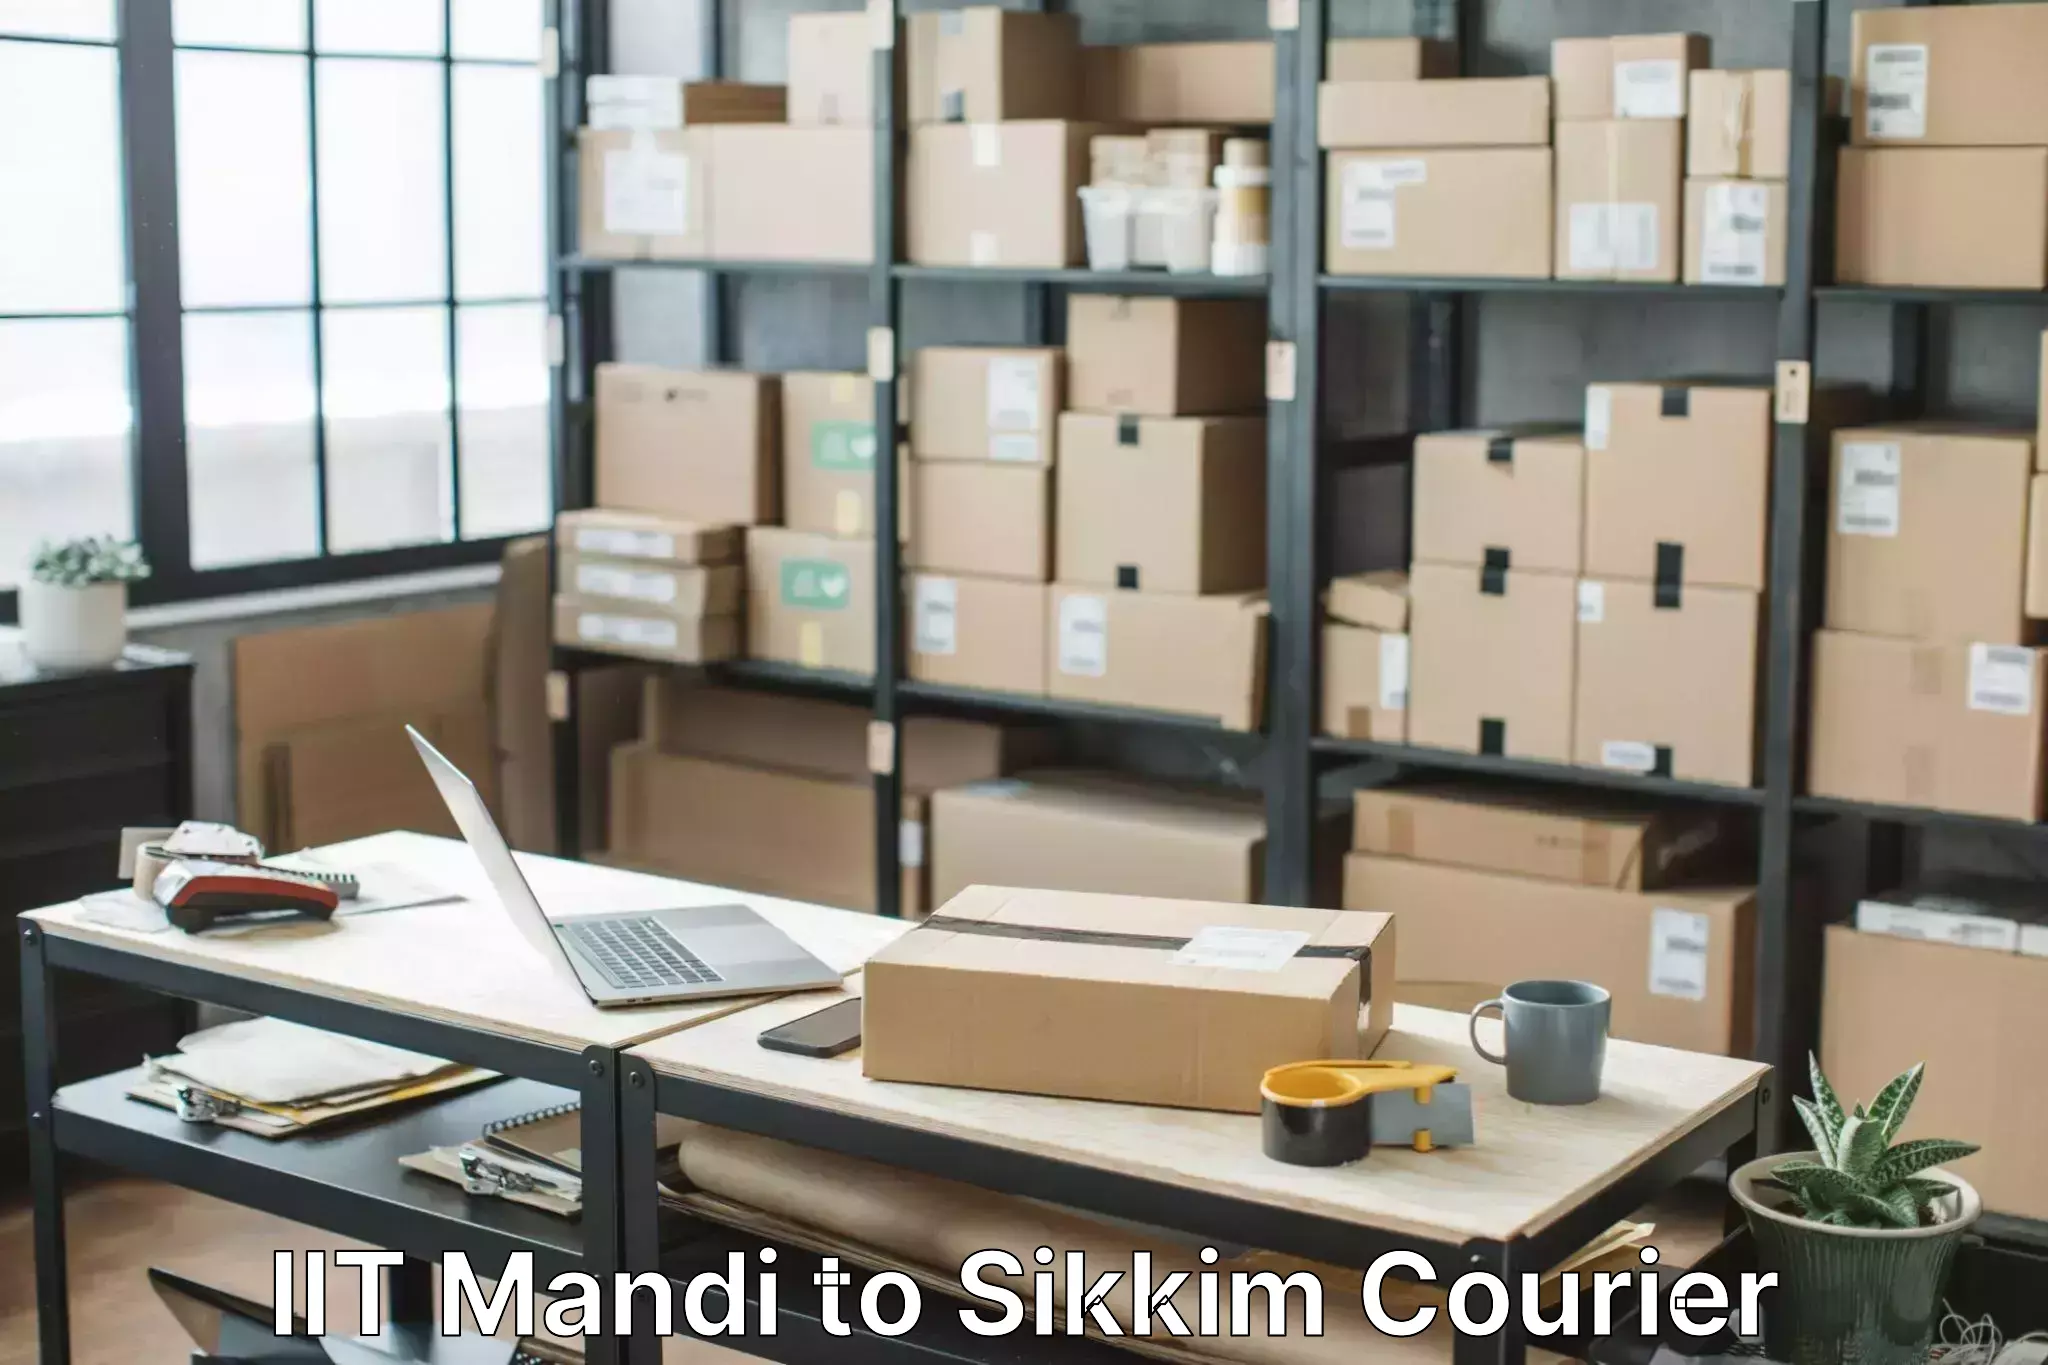 Hassle-free relocation IIT Mandi to Sikkim